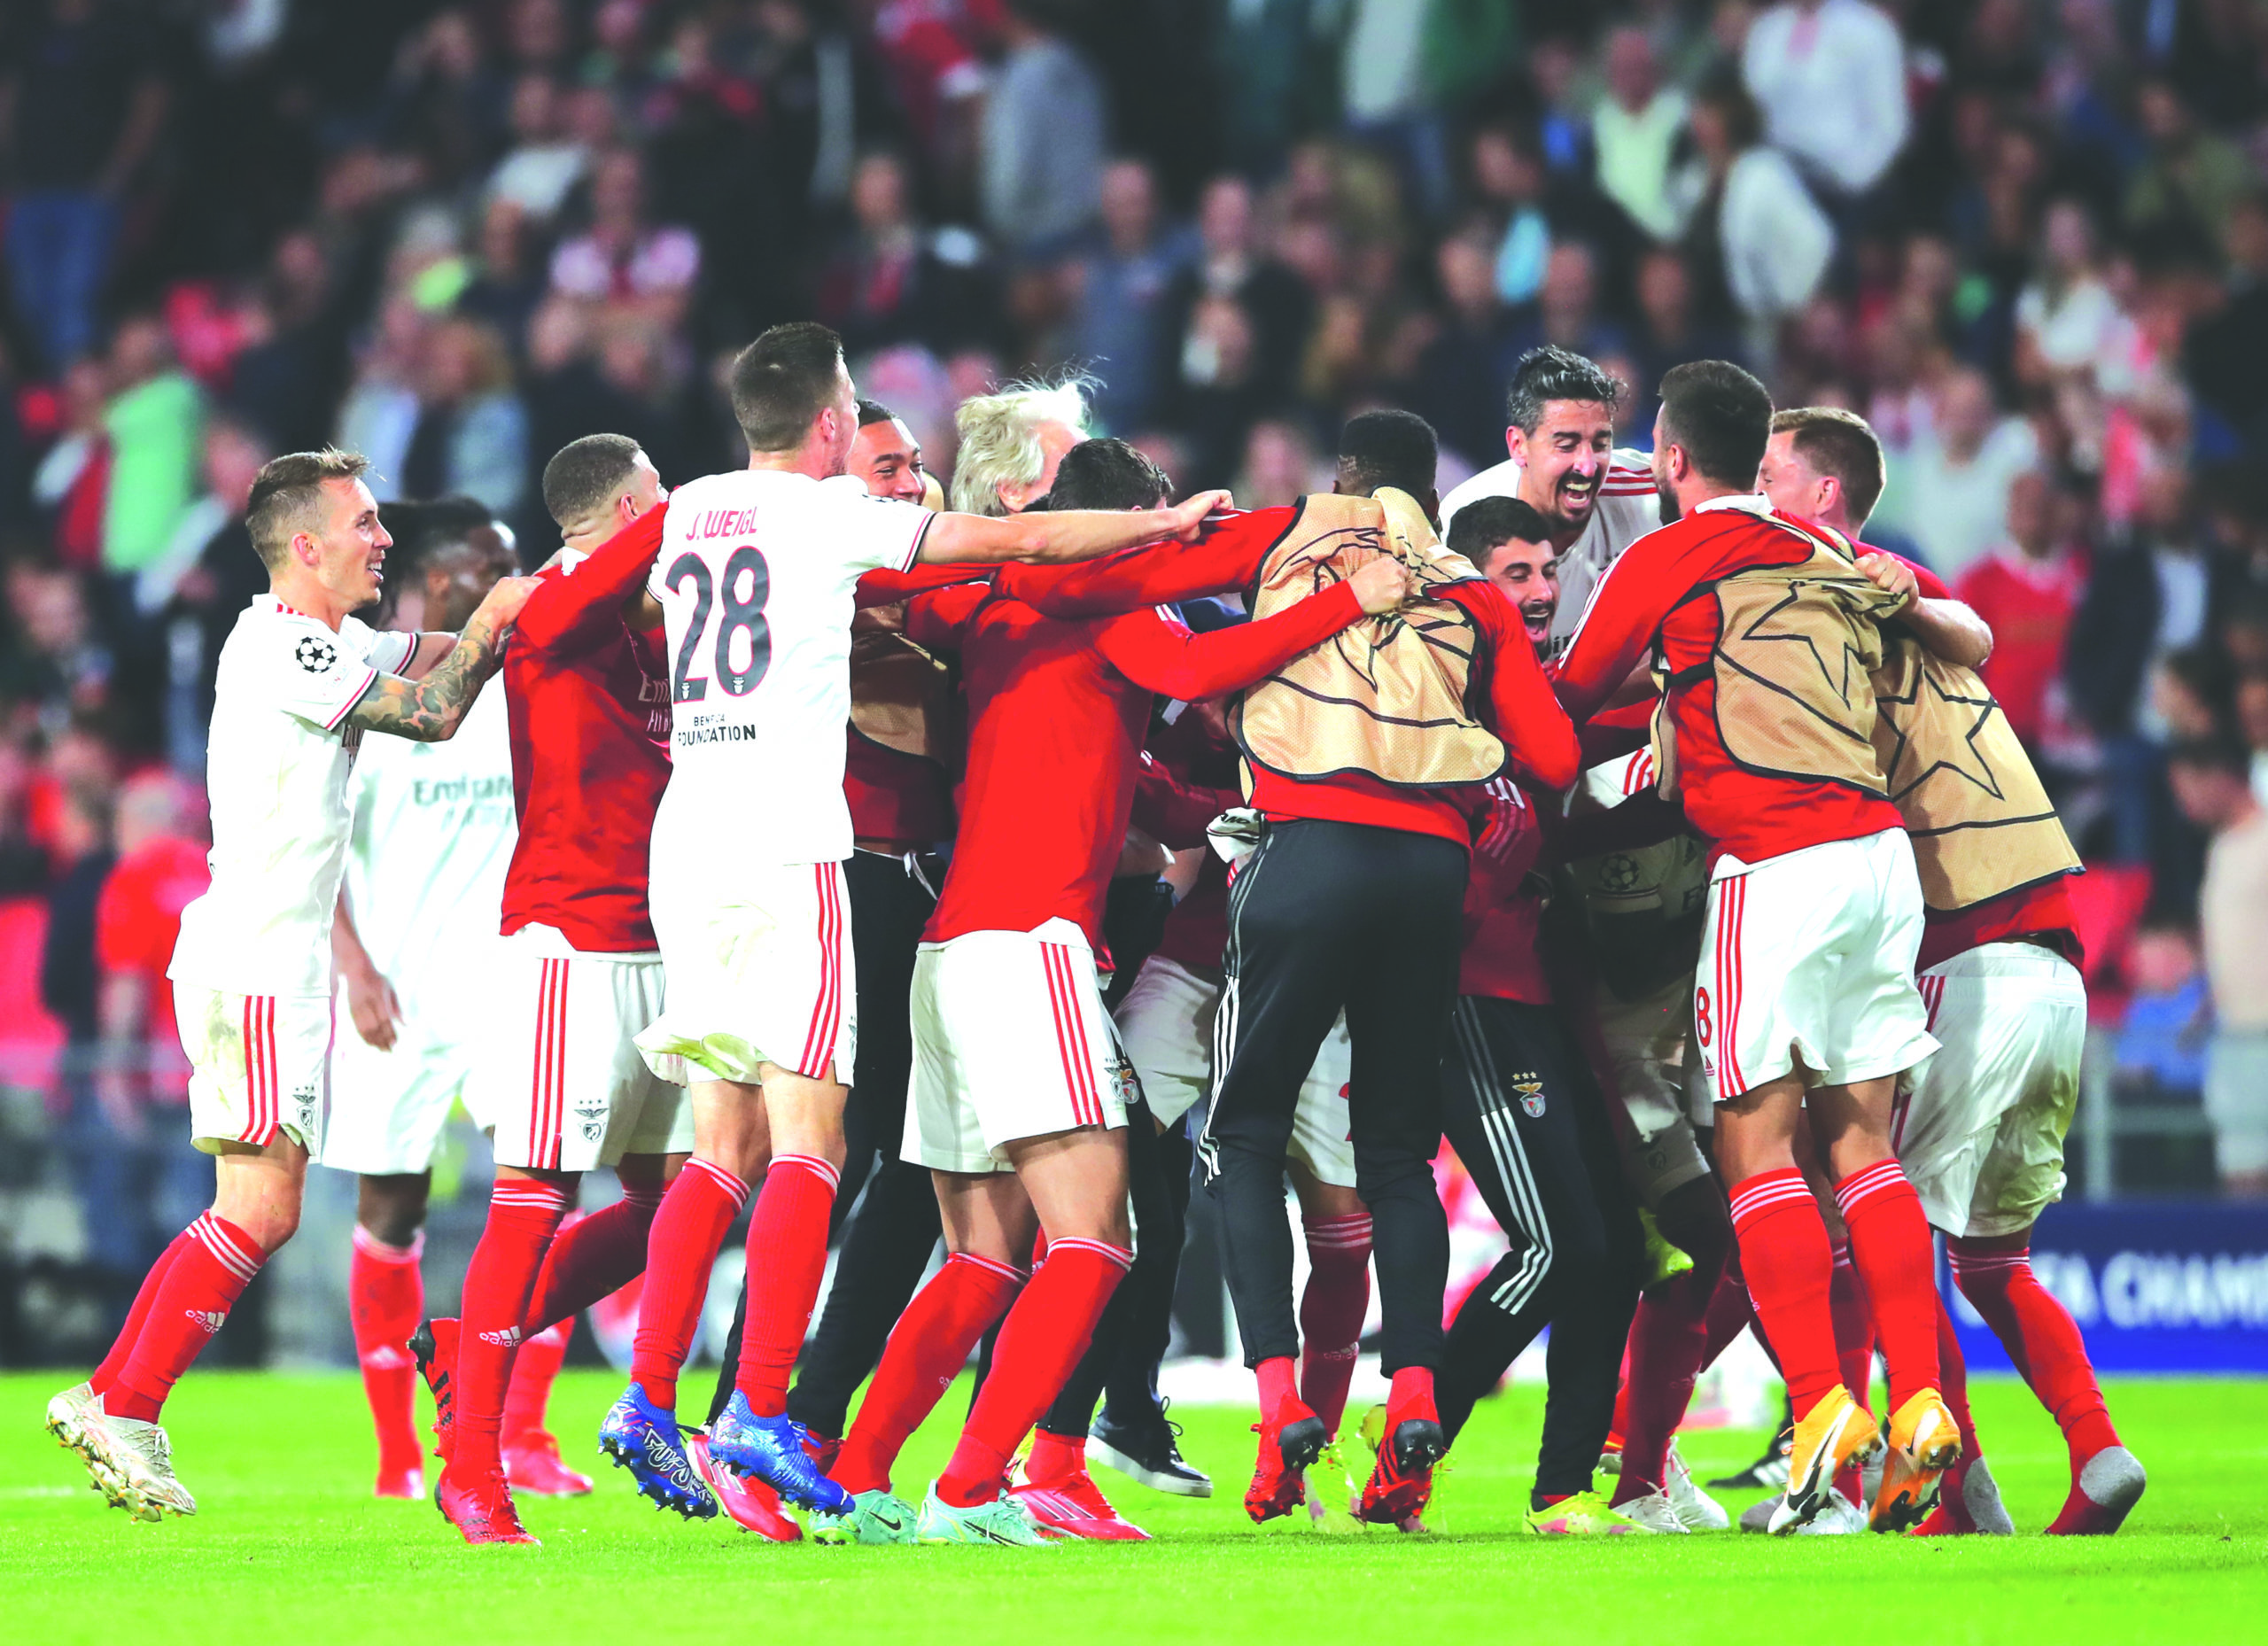 Benfica, Malmö, Young Boys advance to Champions League